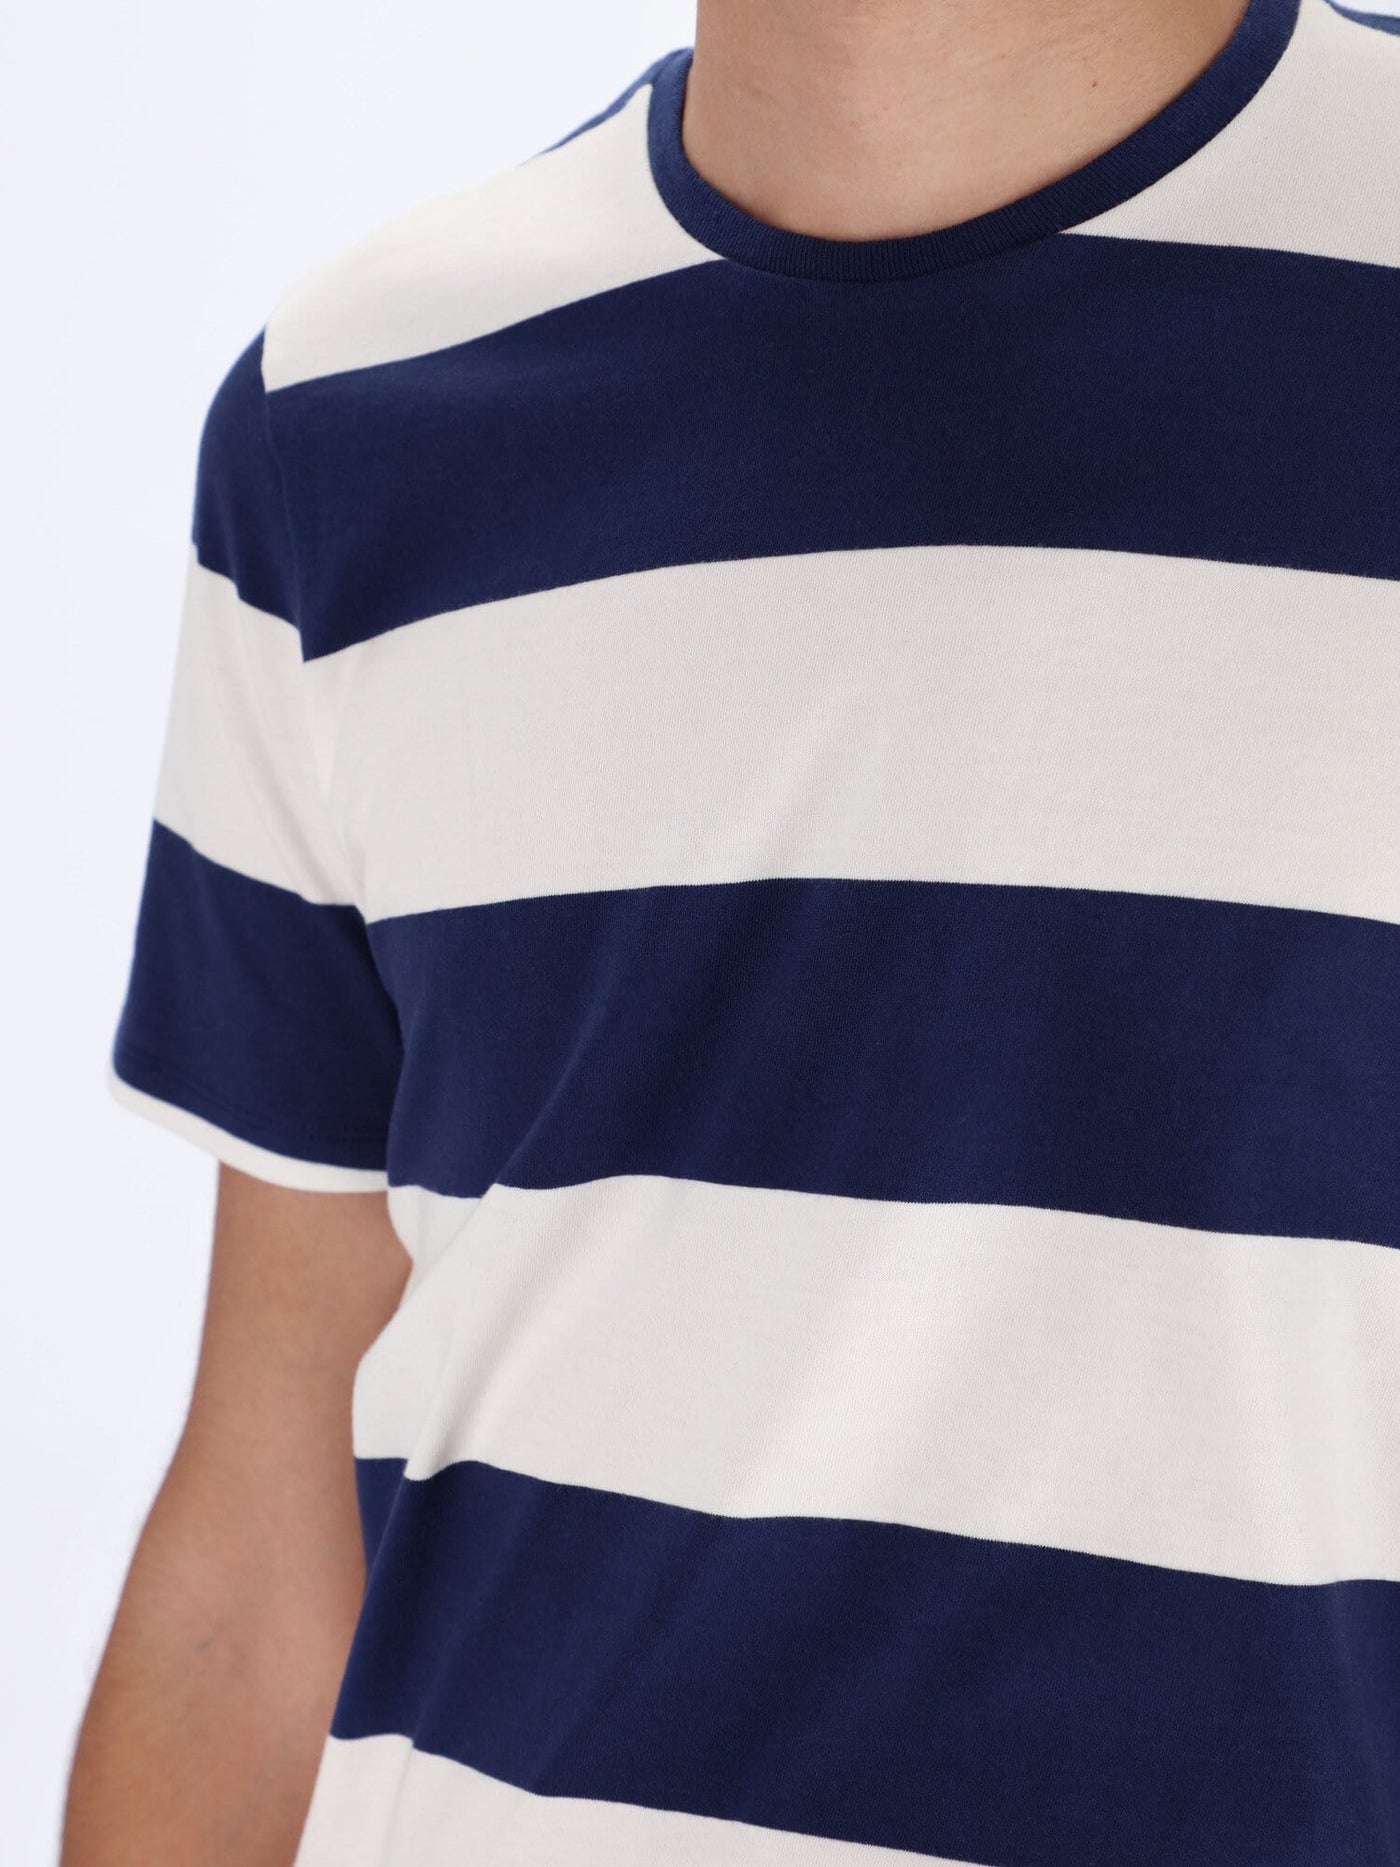 Daniel Hechter T-Shirts Horizontal Stripes Bold Lines T-Shirt